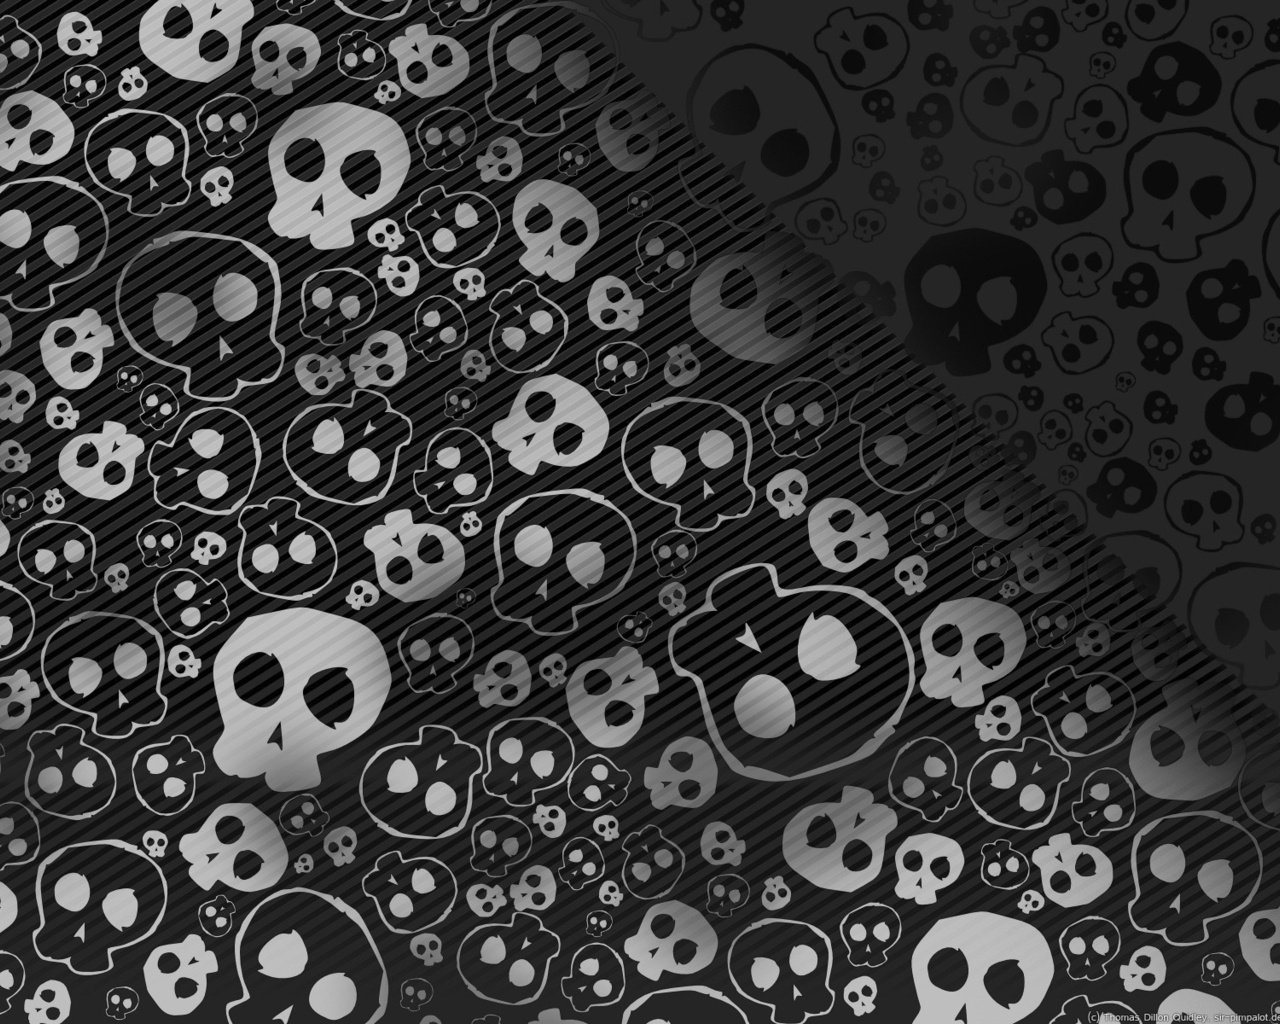 Black And White Skull Wallpapers